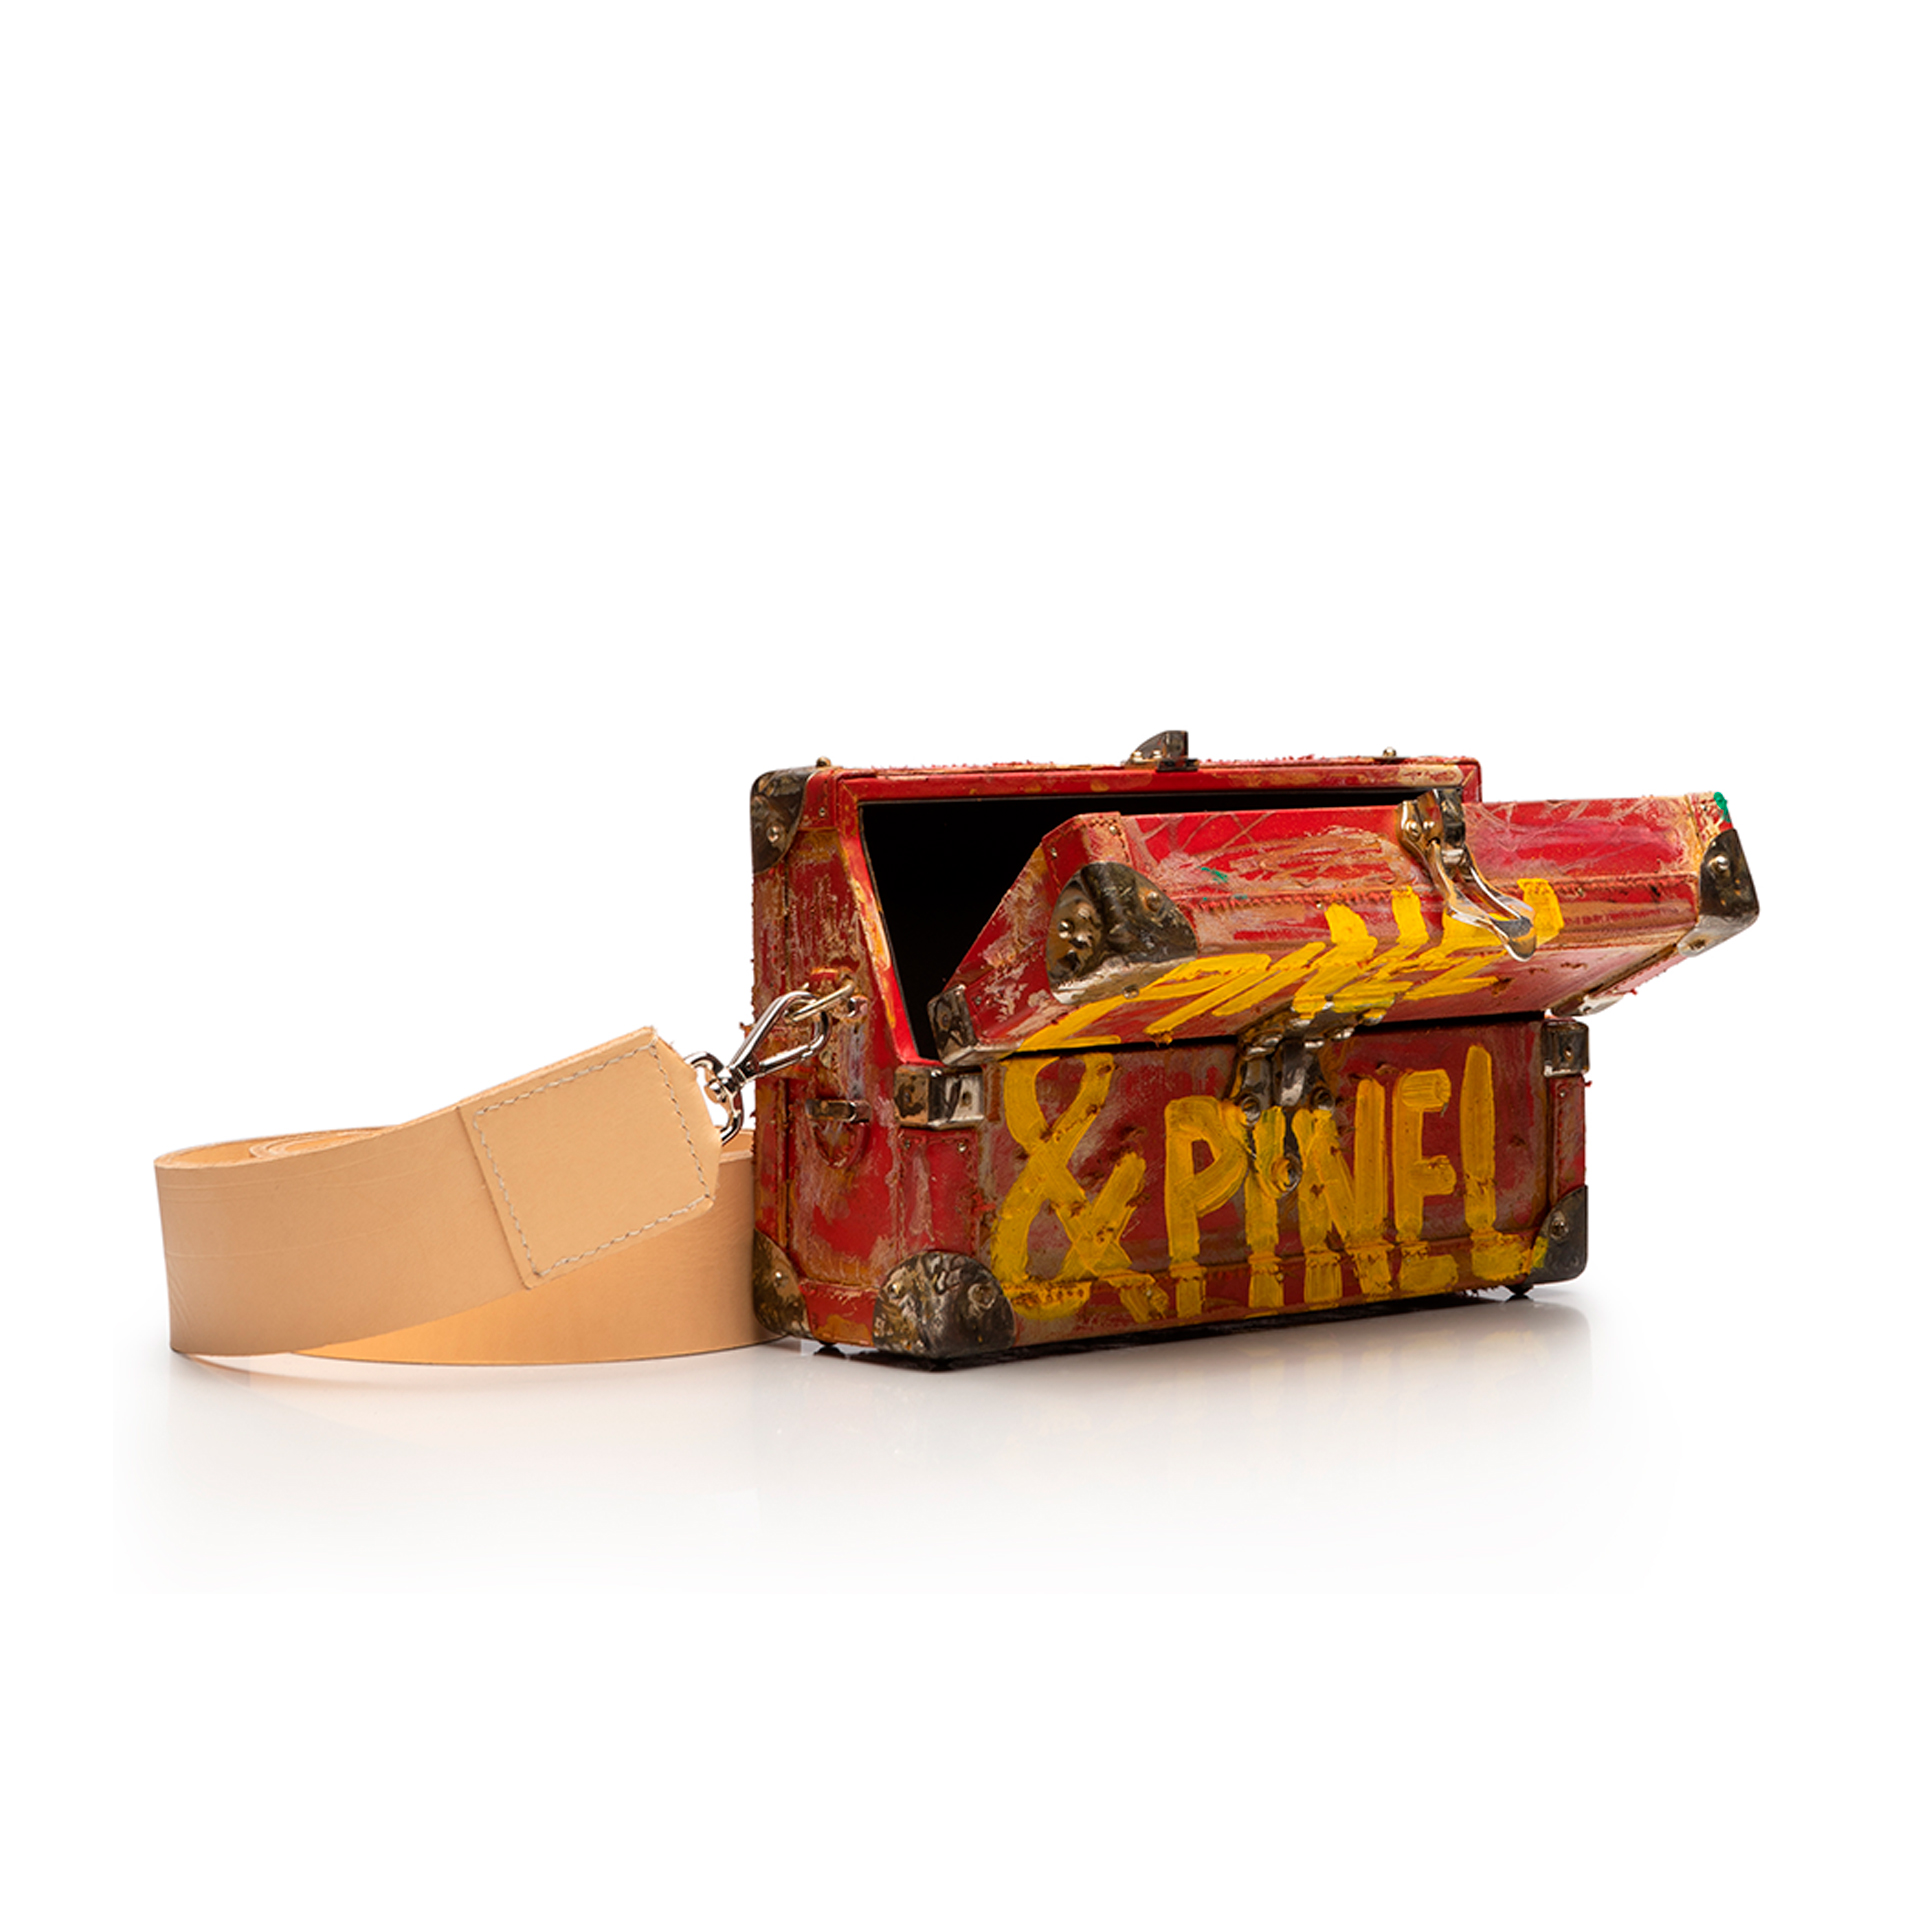 Edition limitée Mini malle Pinel et Pinel x Joris Ghilini - Calfskin red #16